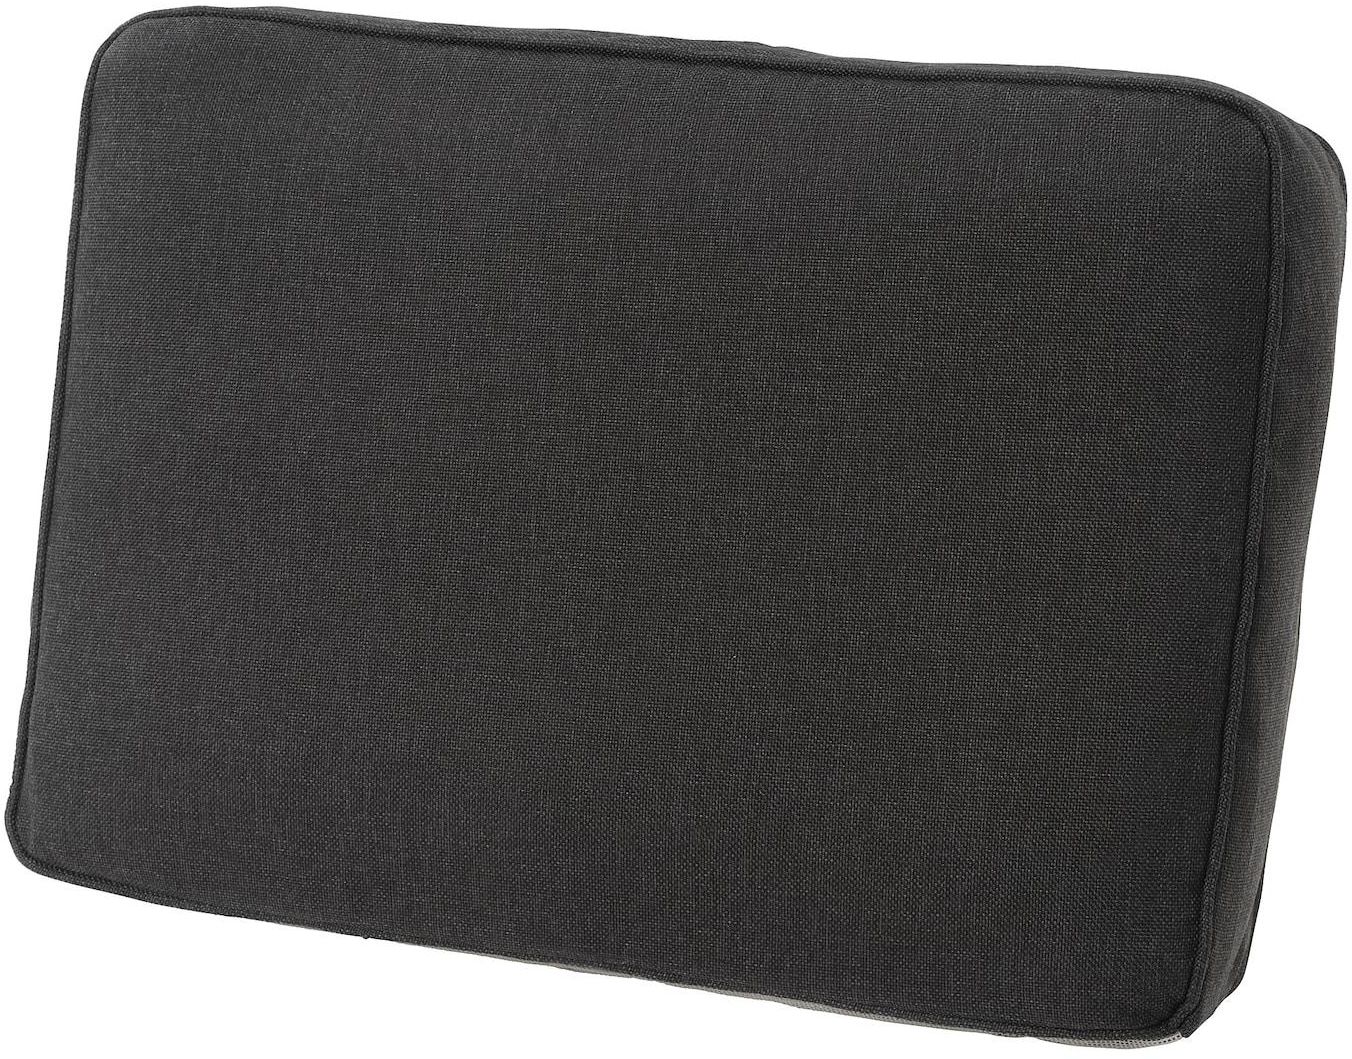 JÄRPÖN Cover for back cushion - outdoor anthracite 62x44 cm